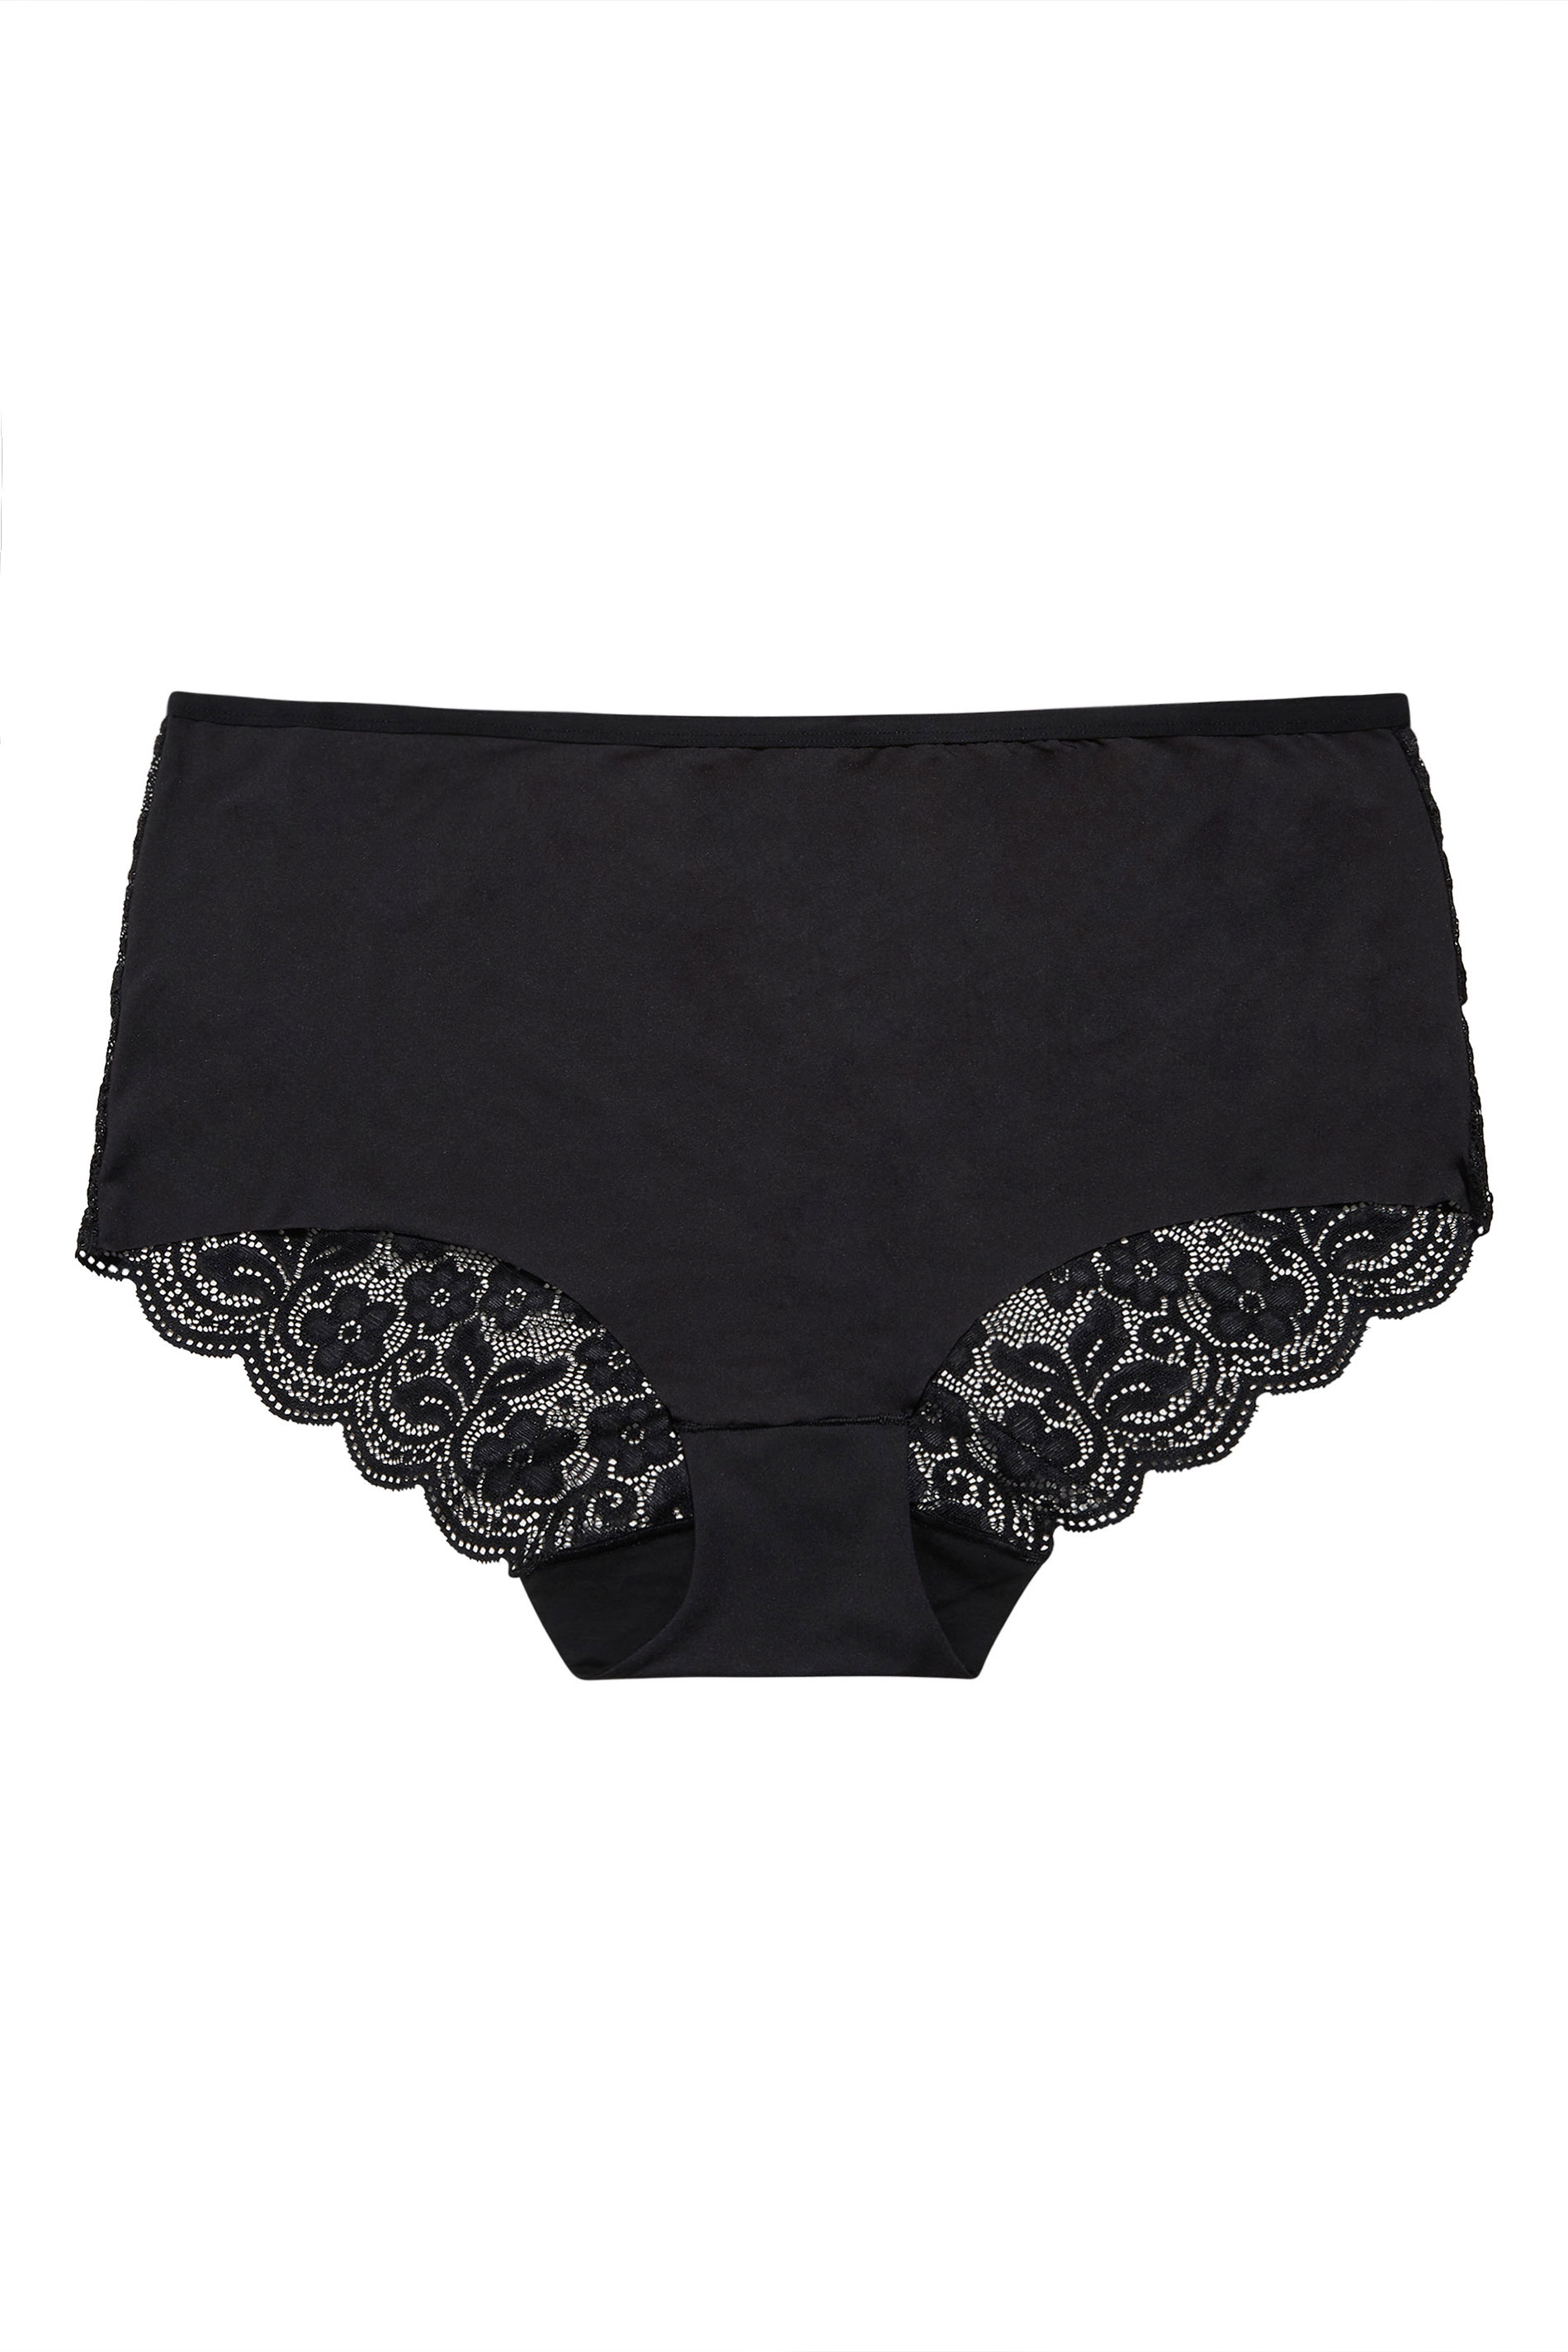 10 x Full Brief Black Pack Womens Underwear - XY Edition S M L XL XXL SIZES  2XL 